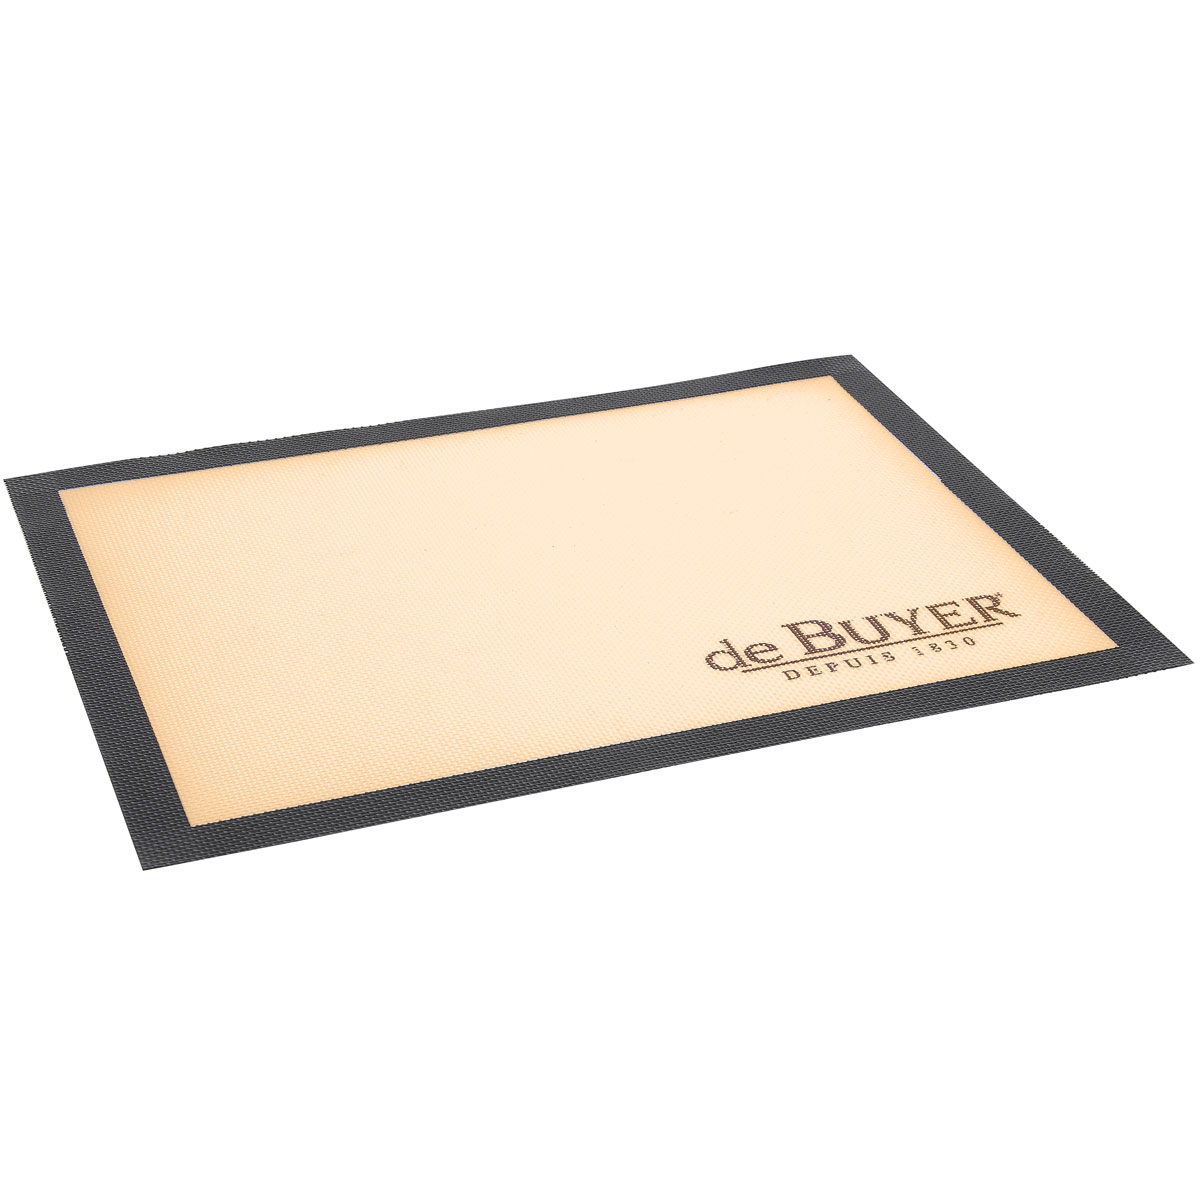 de Buyer Backmatte Airmat gelocht 40x30 cm - Silikon